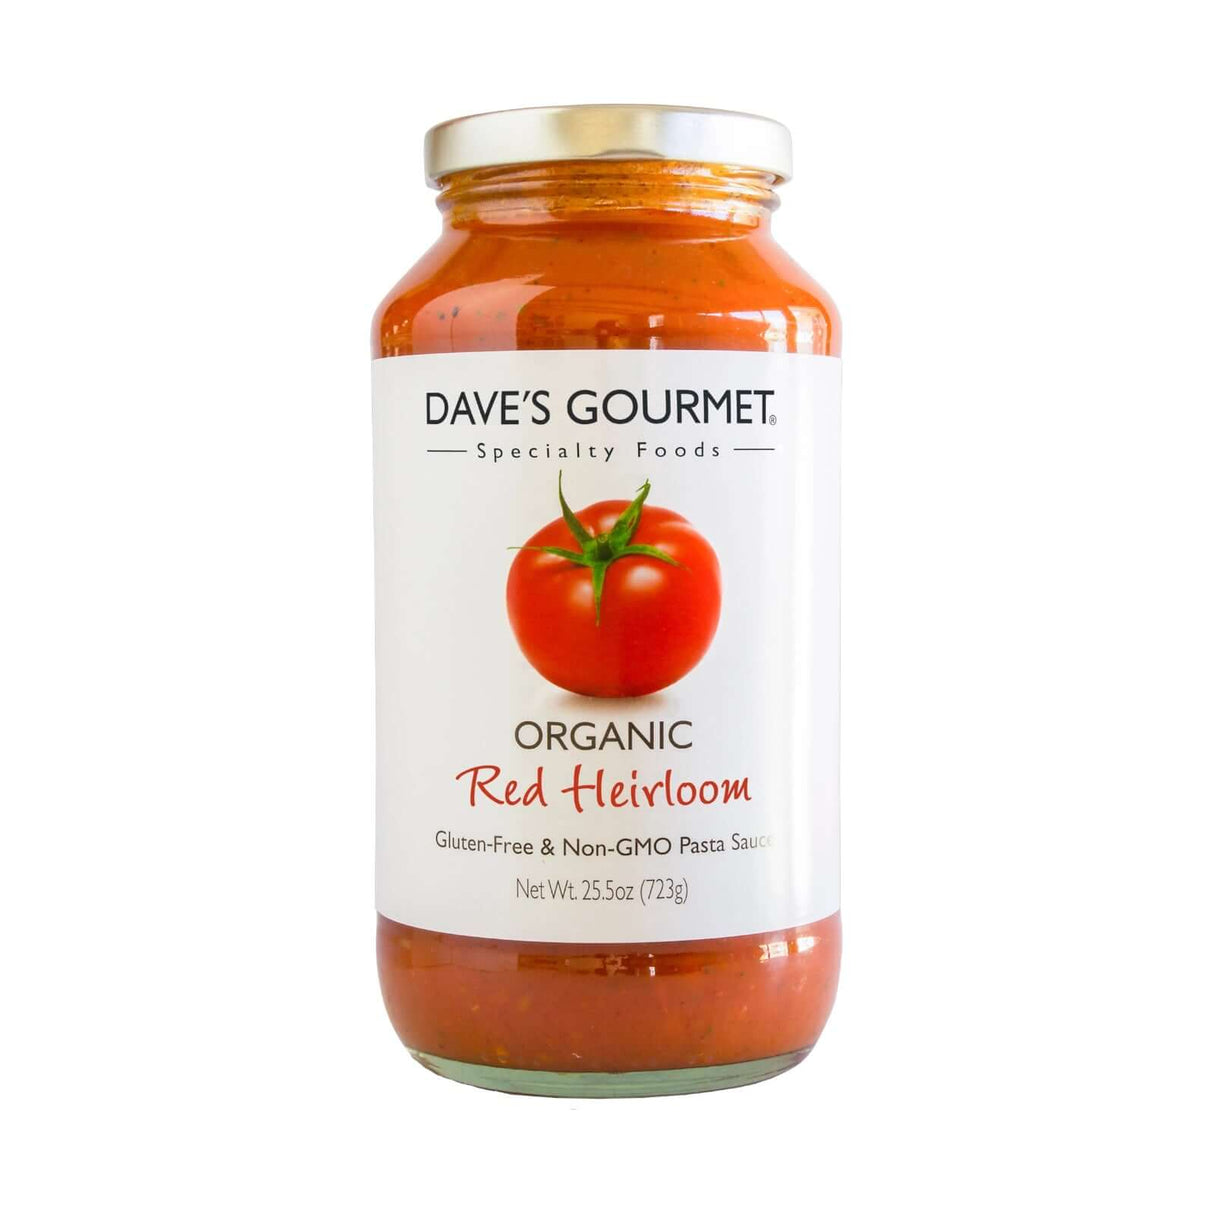 DAVE'S GOURMET Organic Red Heirloom Pasta Sauce